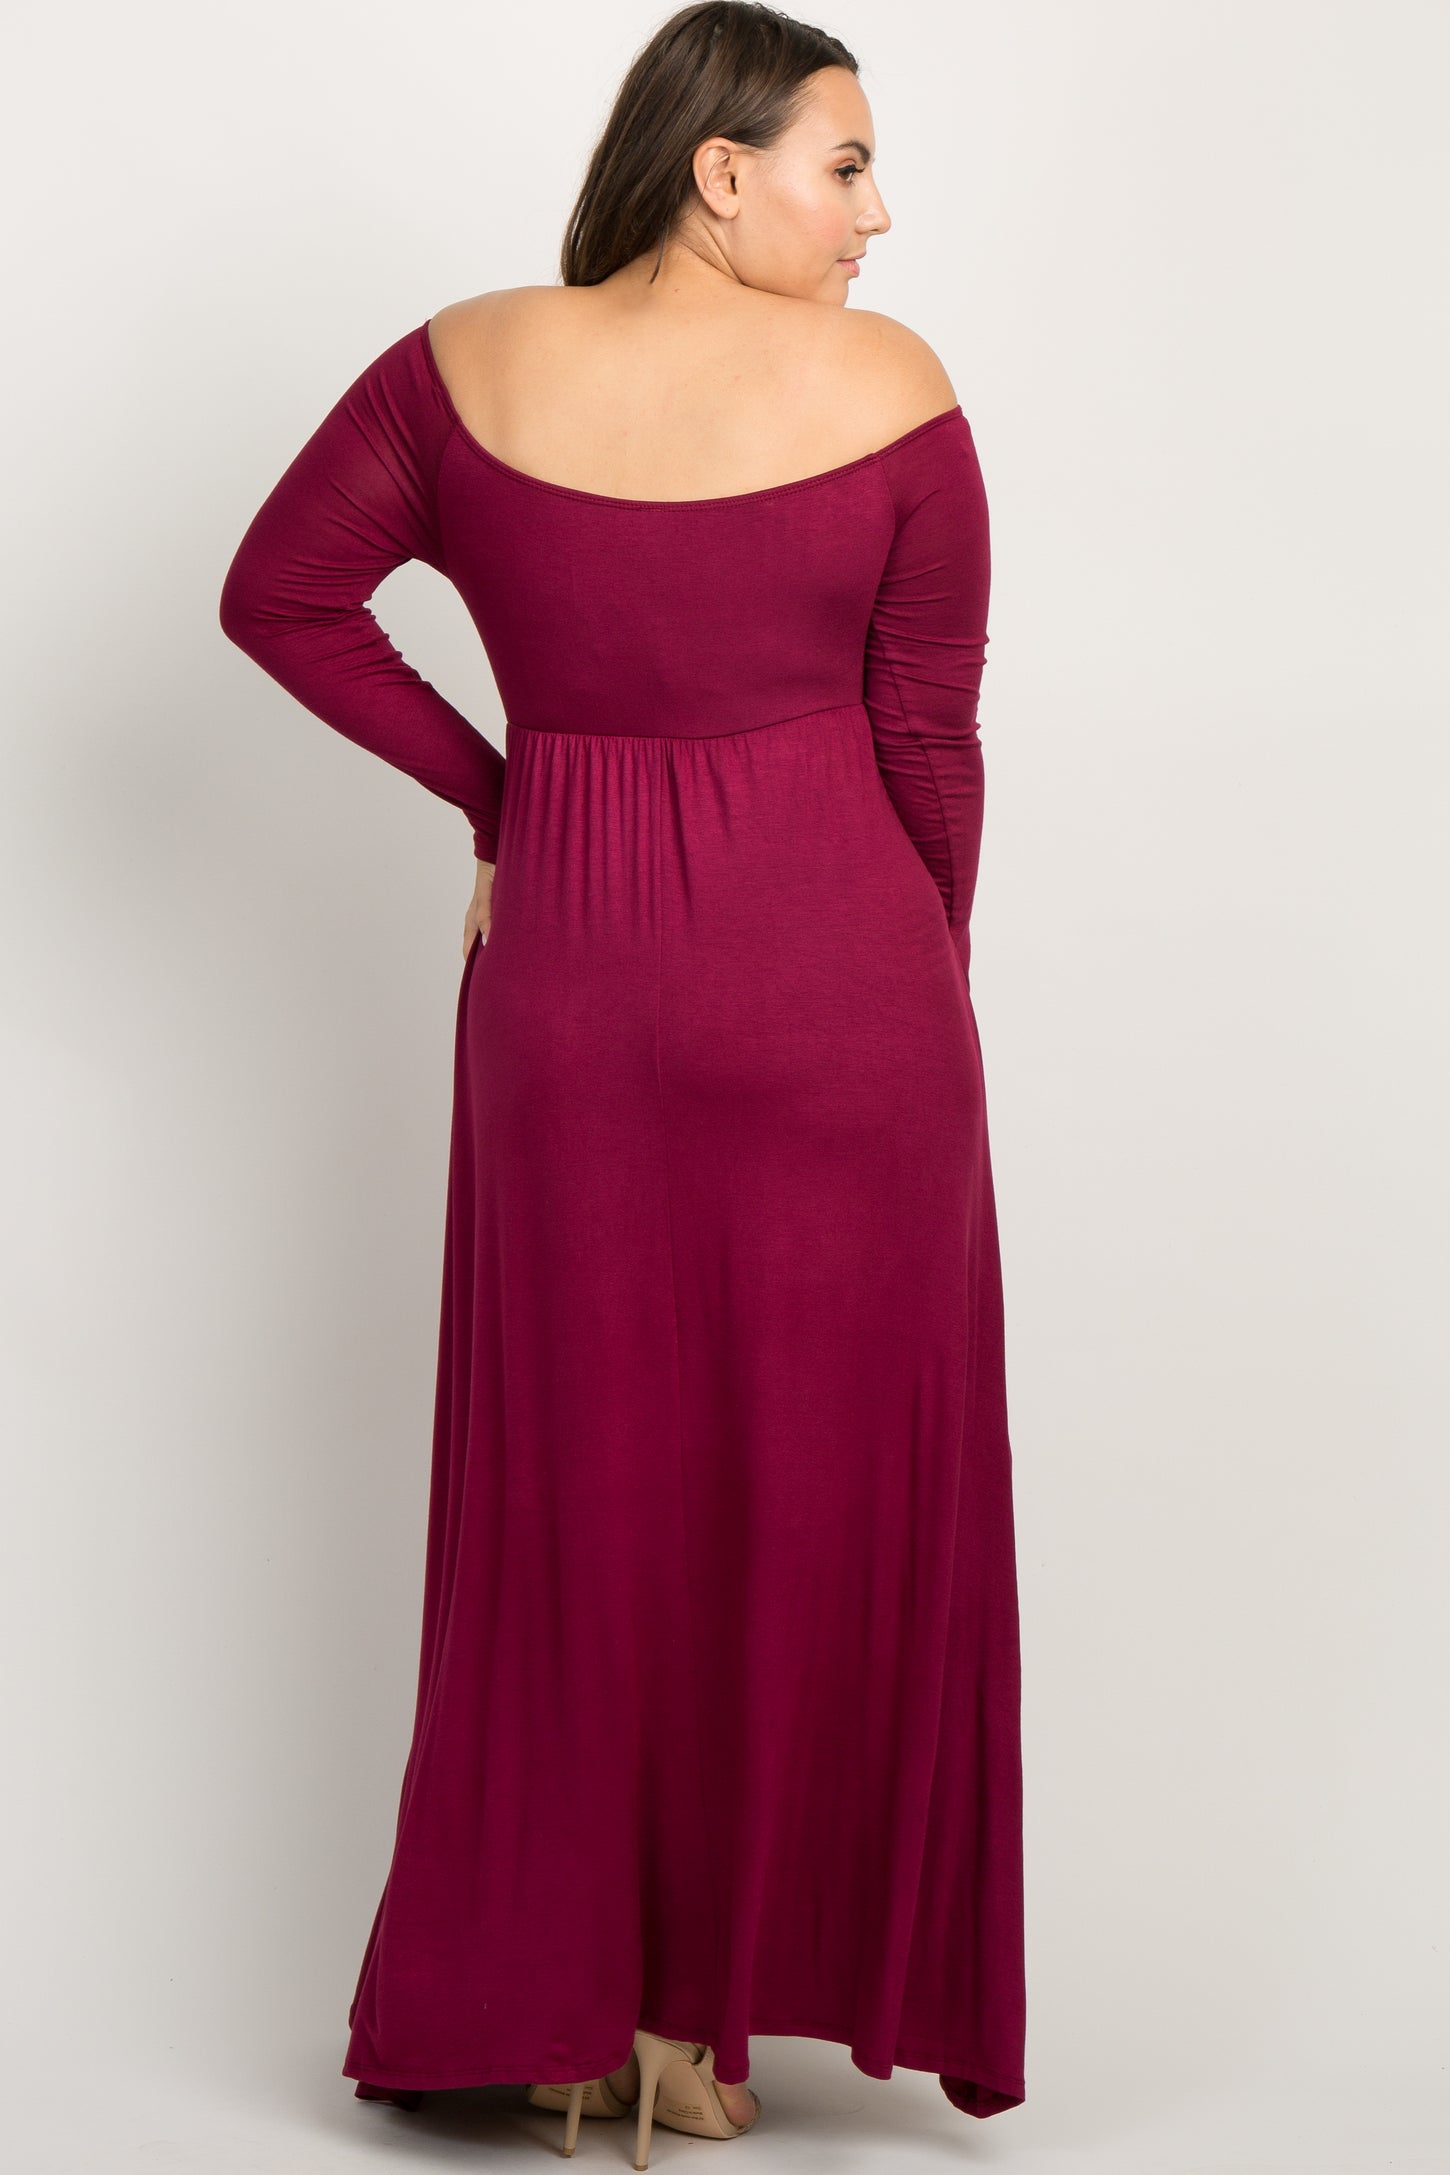 PinkBlush Burgundy Solid Off Shoulder Plus Maxi Dress